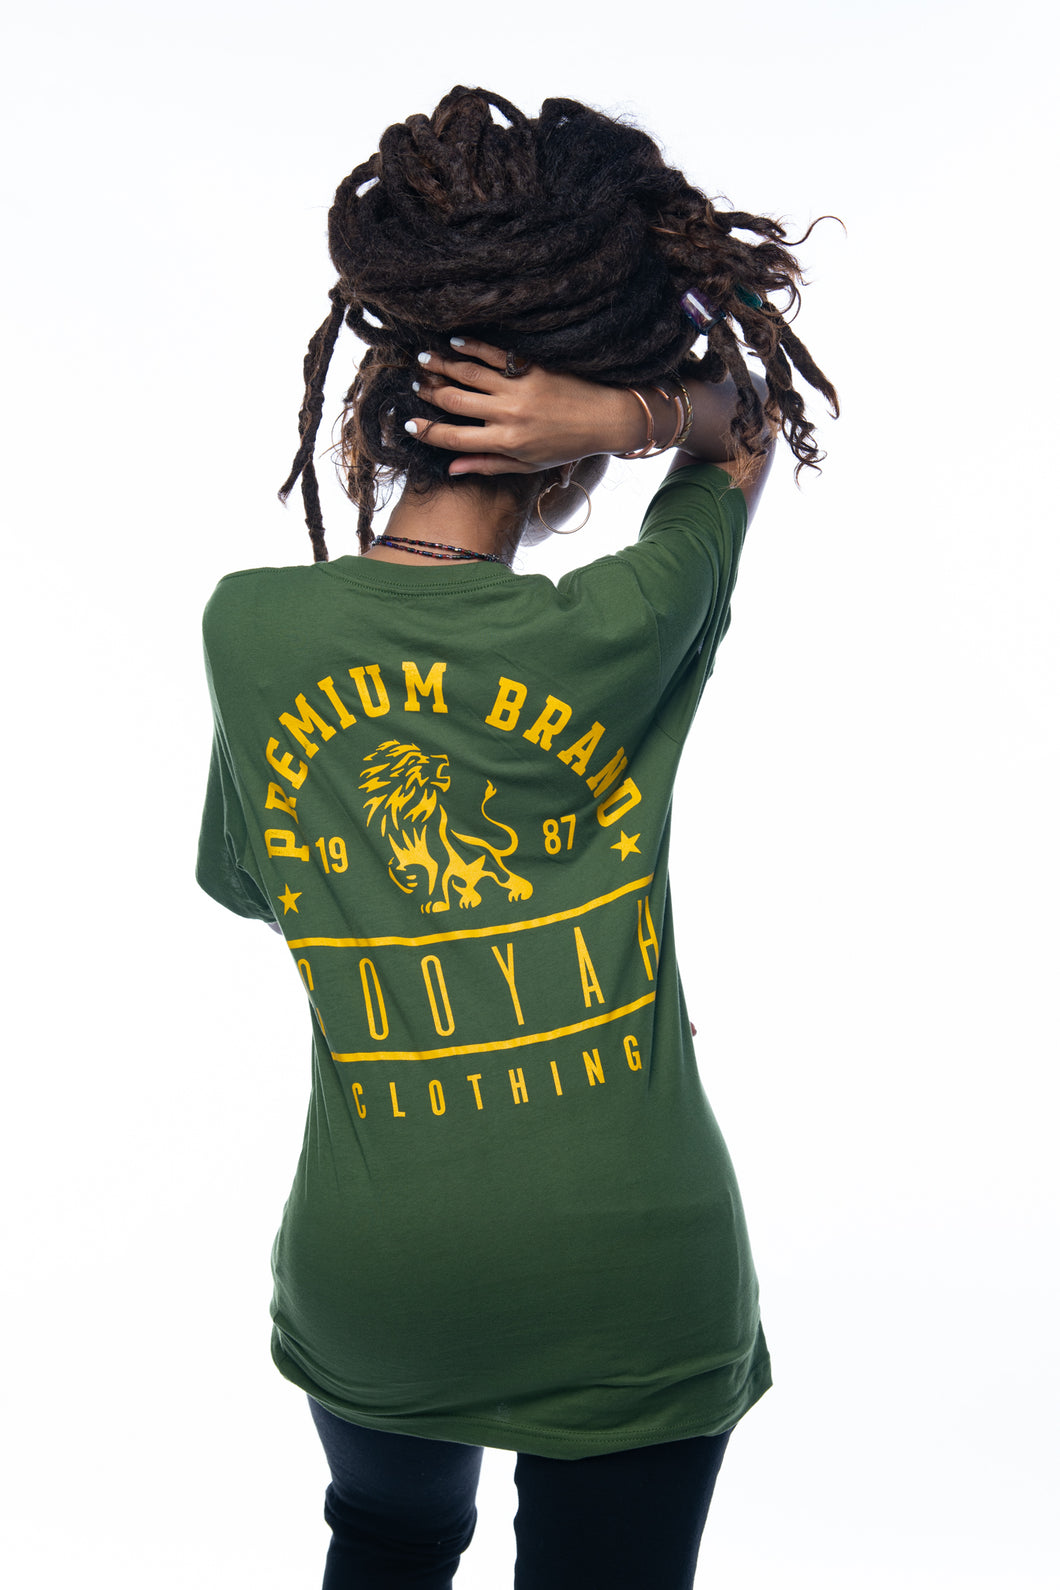 Cooyah Jamaica.  Women's boyfriend fit Premium Brand Lion Print Tee.  Olive green with a gold print.  Ringspun cotton, short sleeve, shirt.  Jamaican clothing brand.